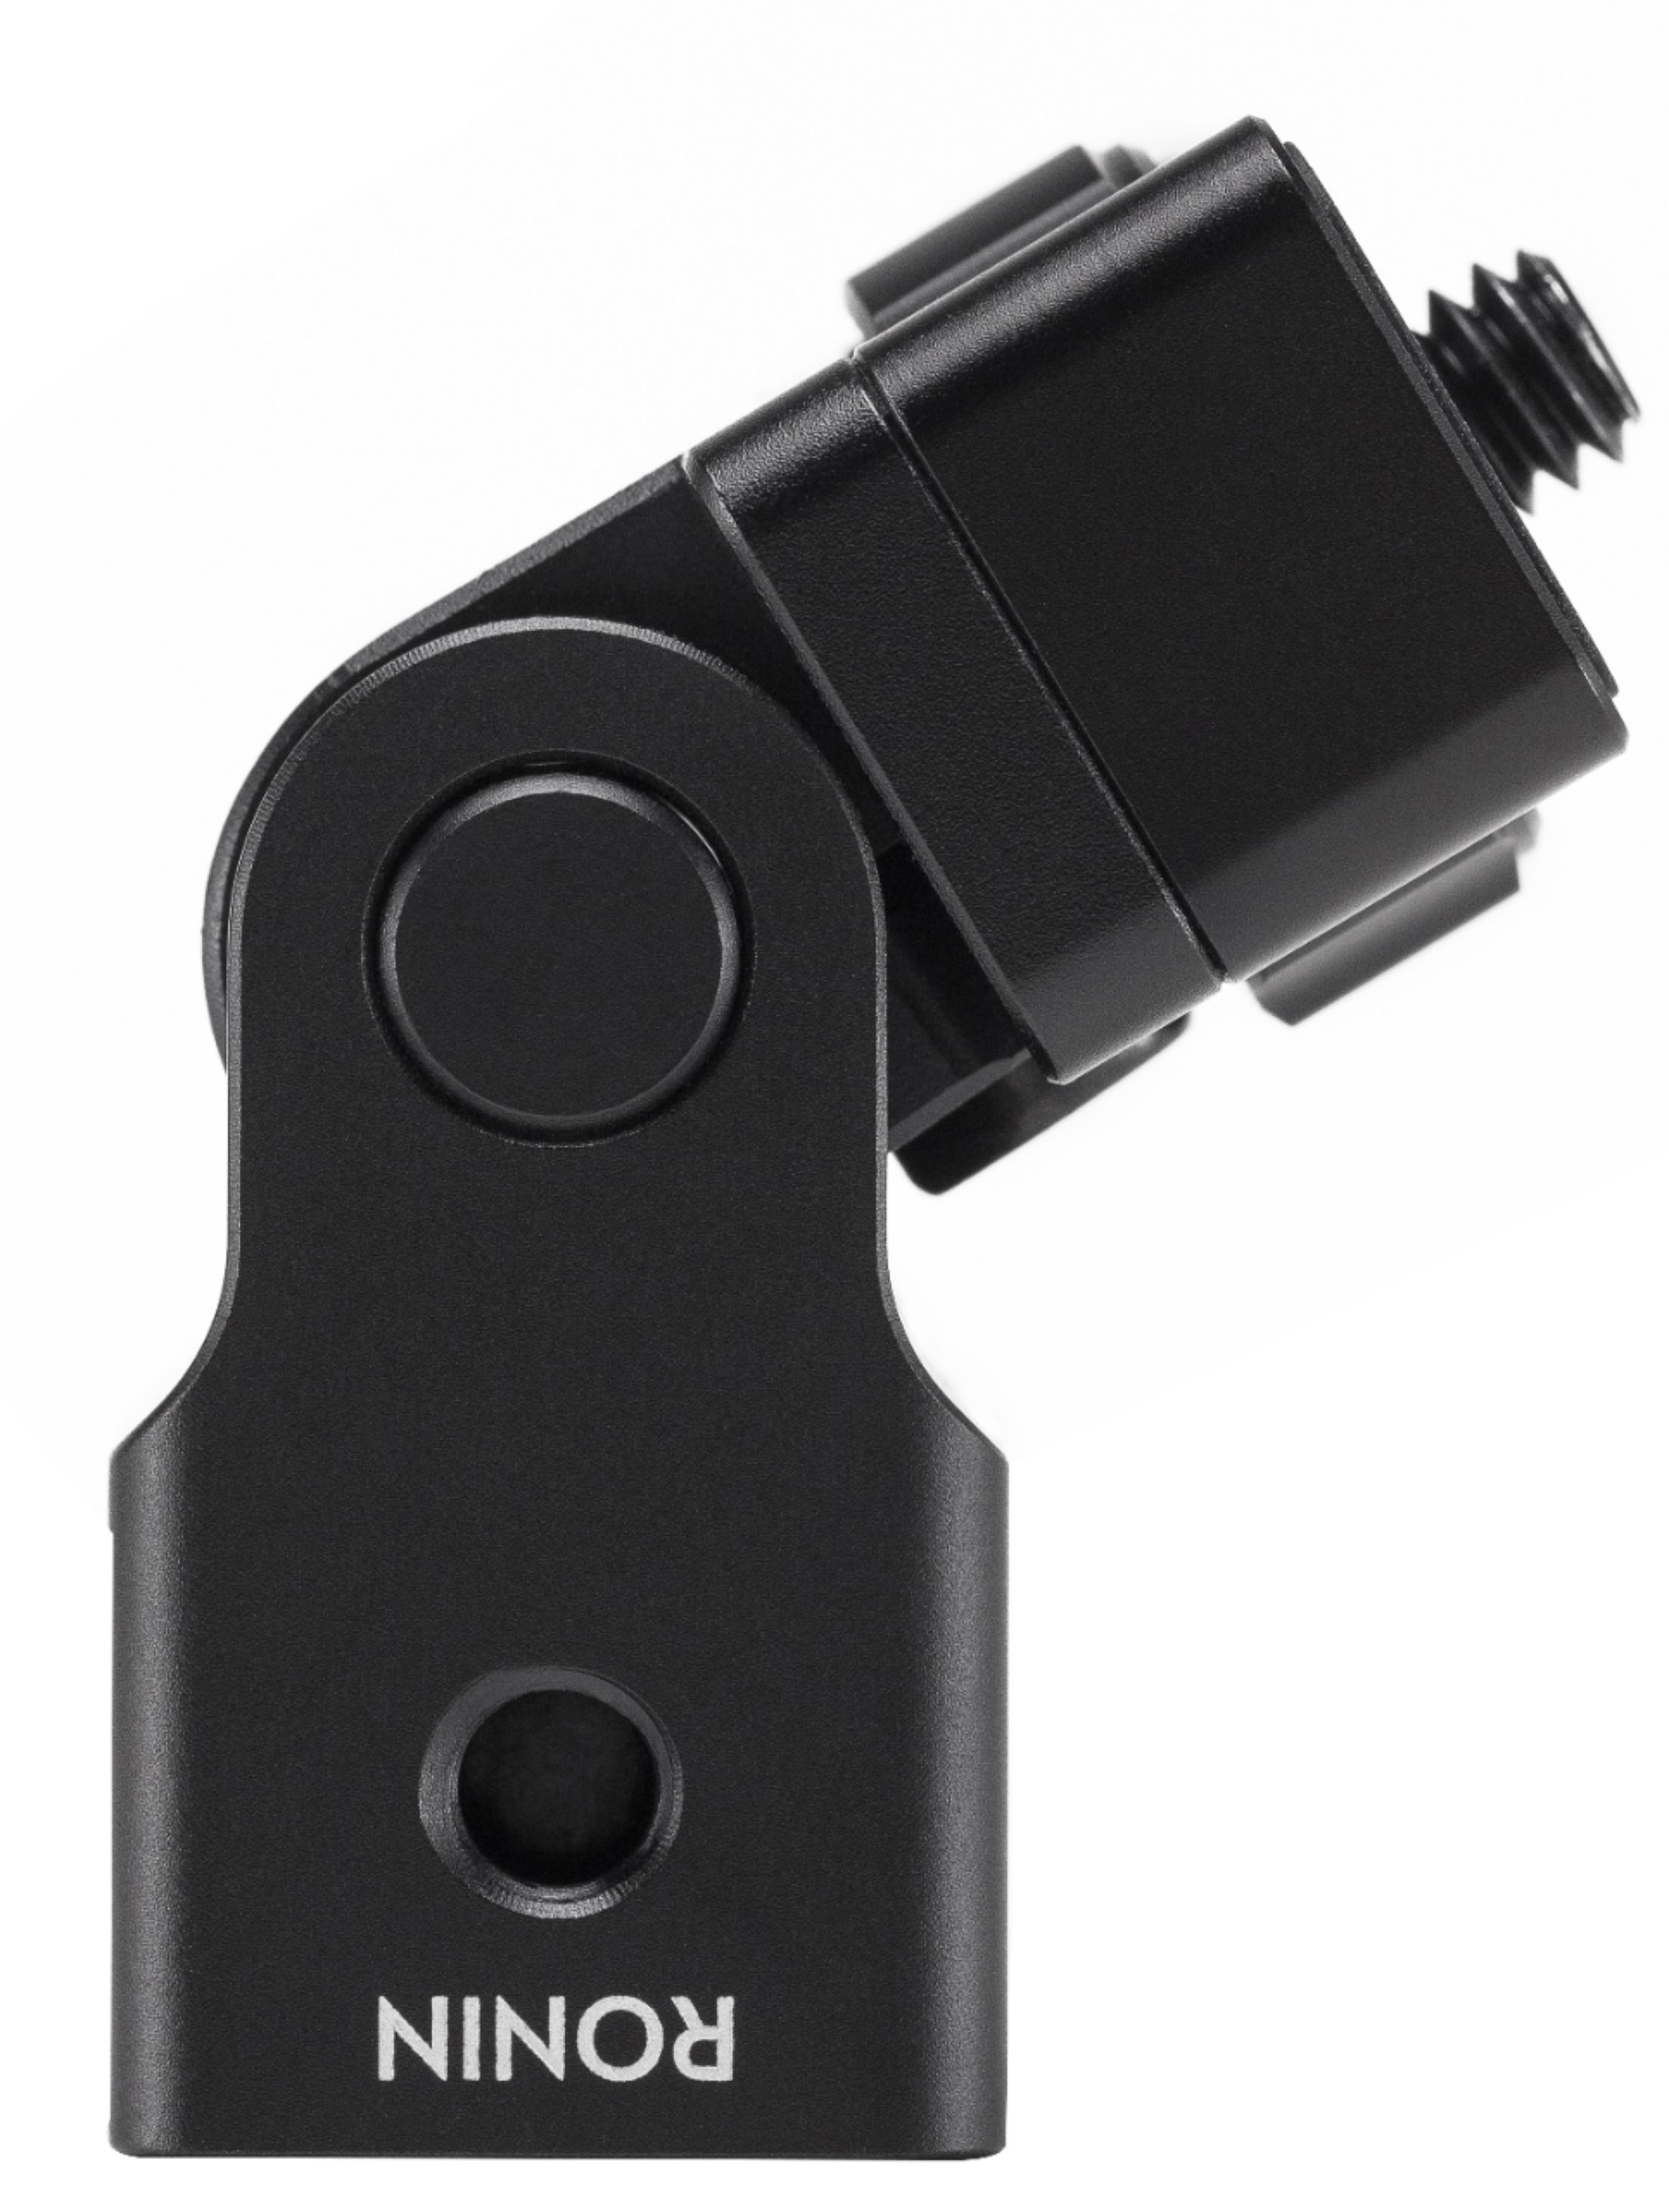 Angle View: 5-Piece Snap Adapter for DJI Mavic Mini